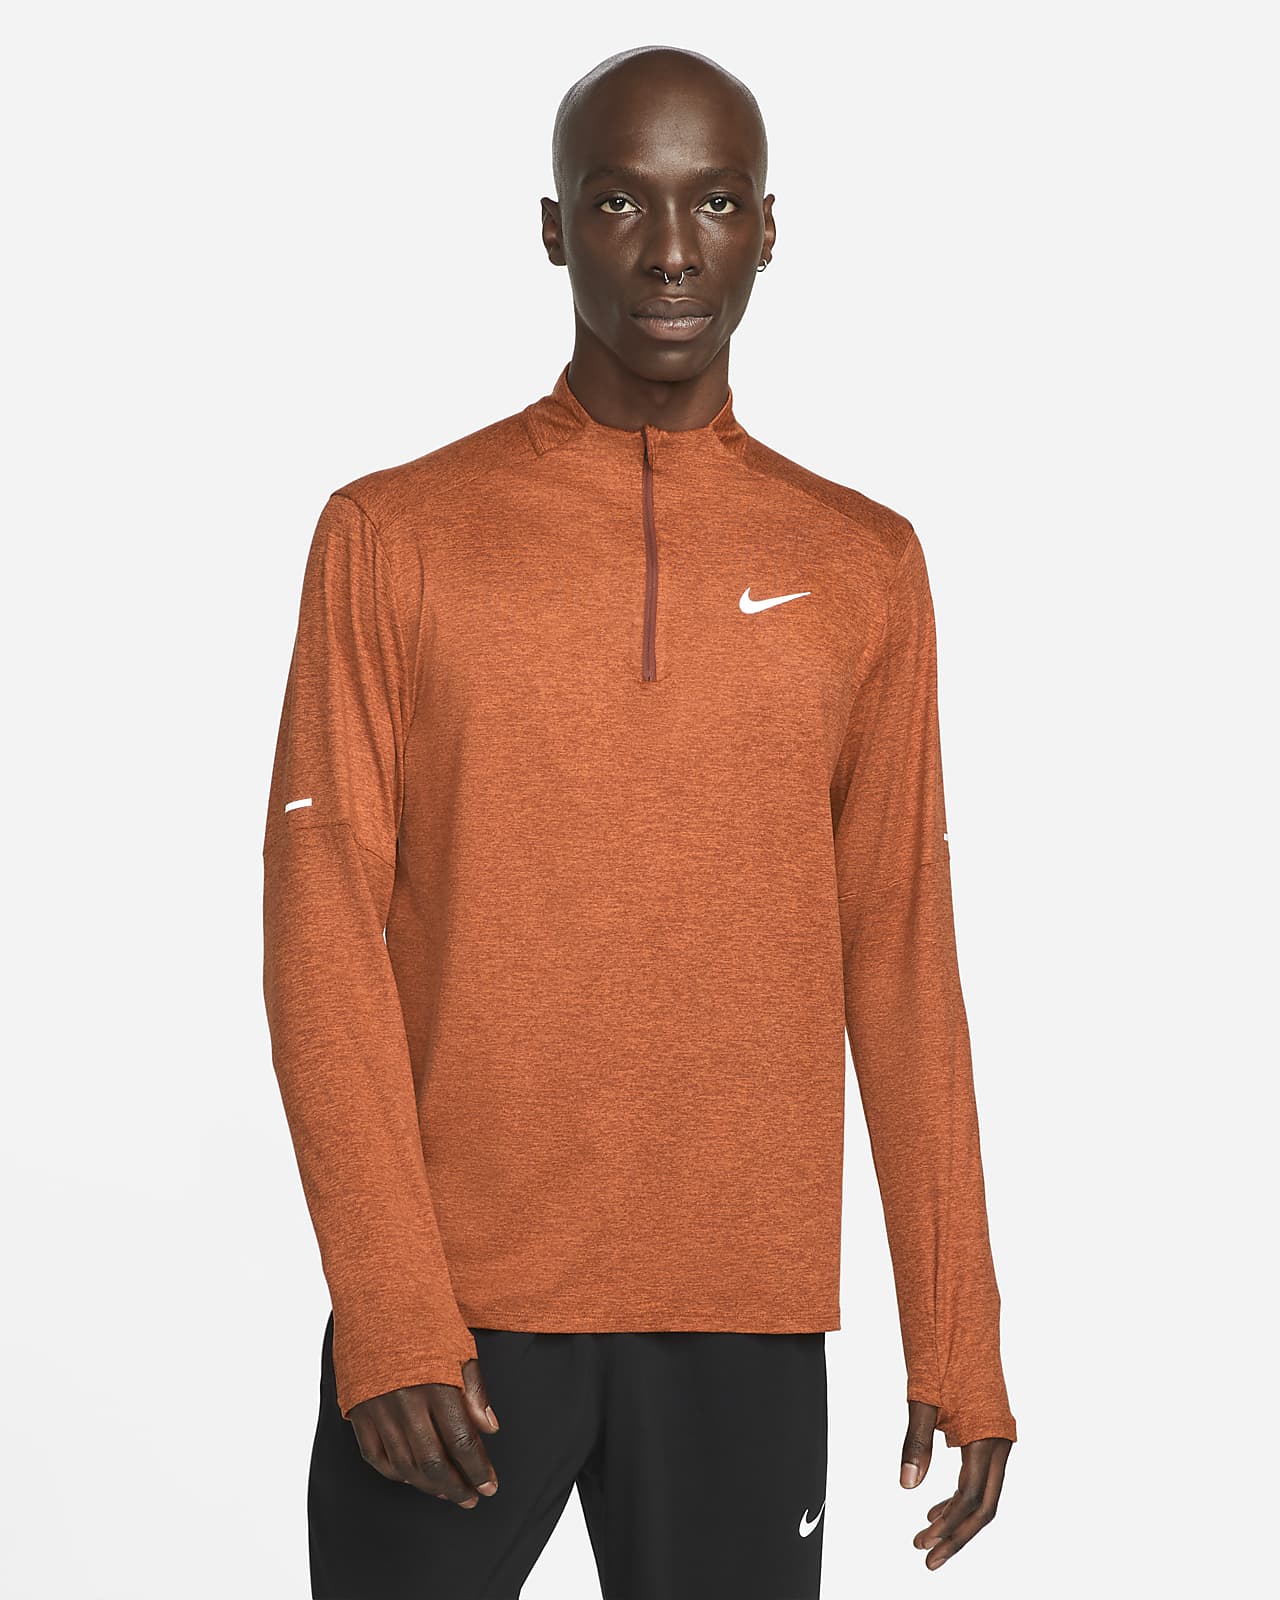 Nike Dri-FIT Element Men's 1/4-Zip Running Top